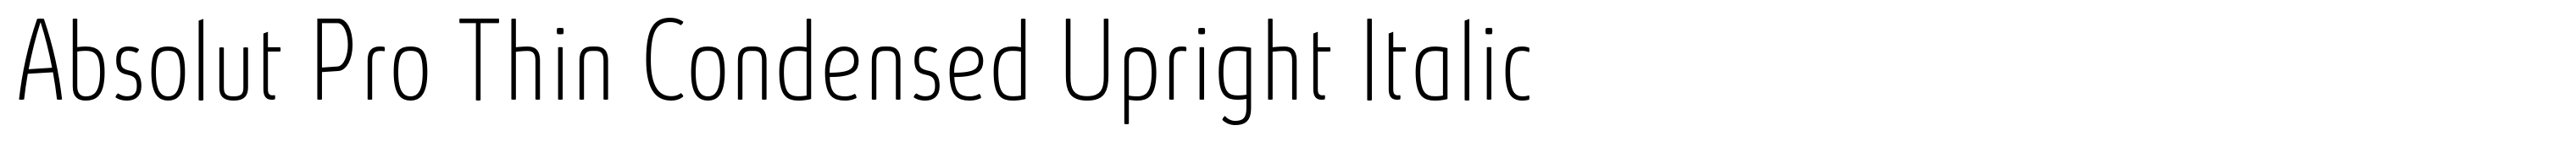 Absolut Pro Thin Condensed Upright Italic